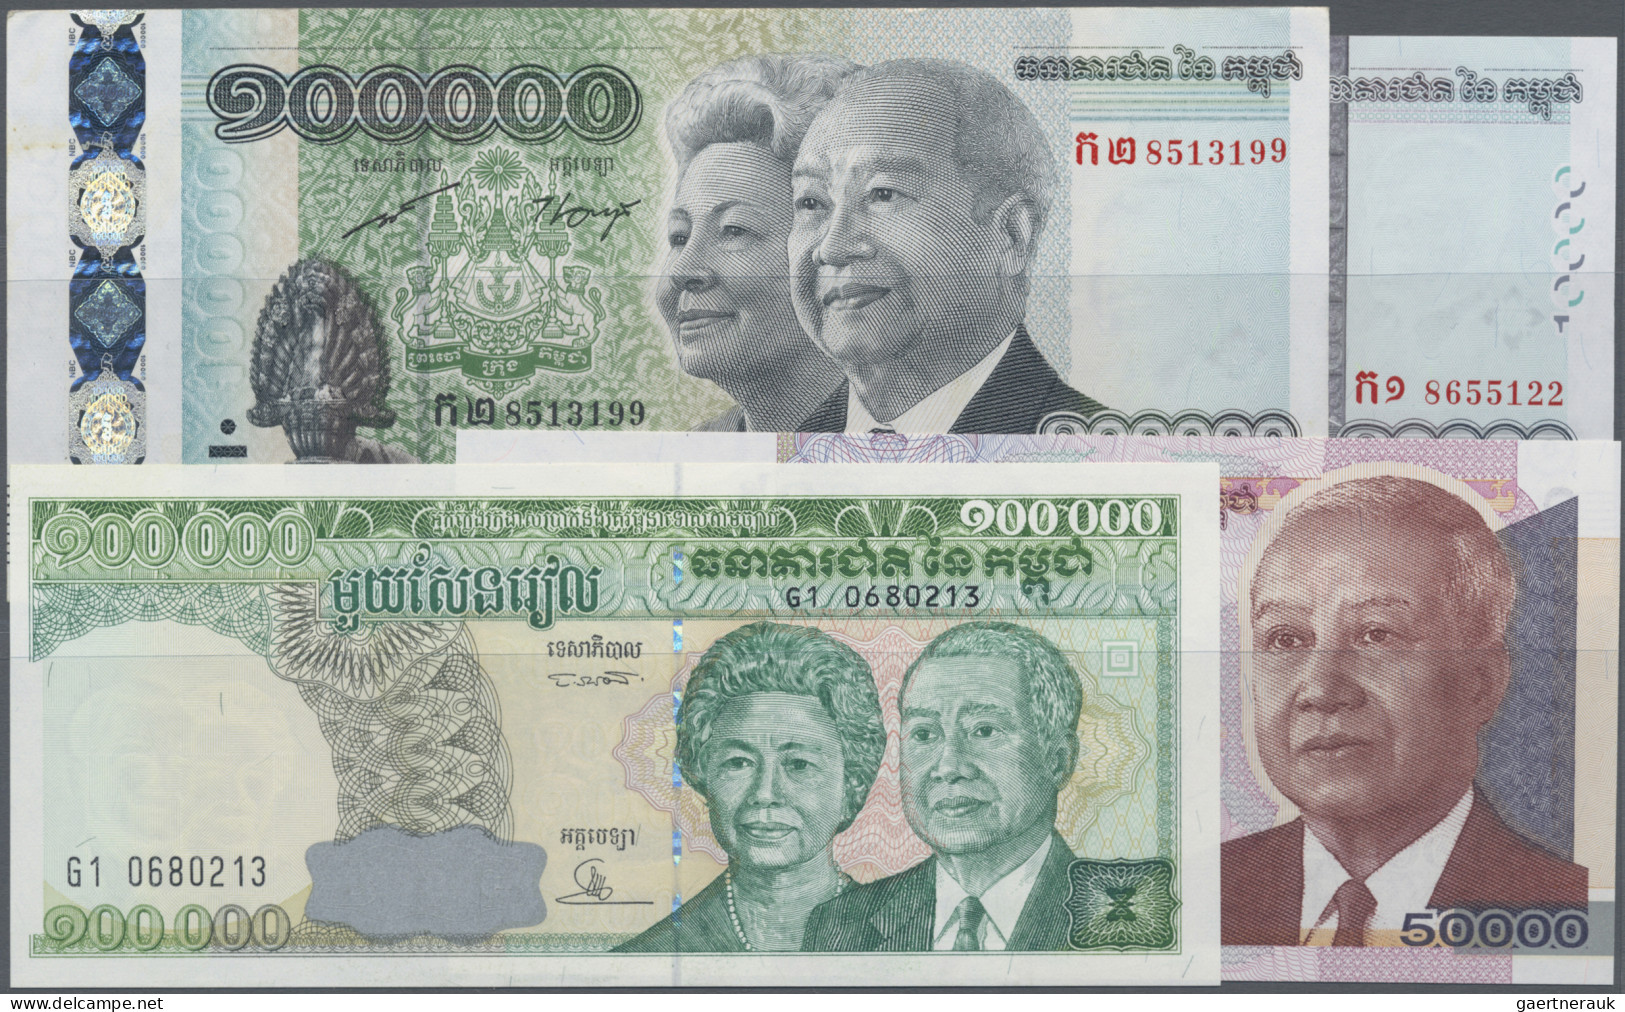 Cambodia: State Bank Of Democratic Kampuchea And National Bank Of Cambodia, Huge - Cambodia